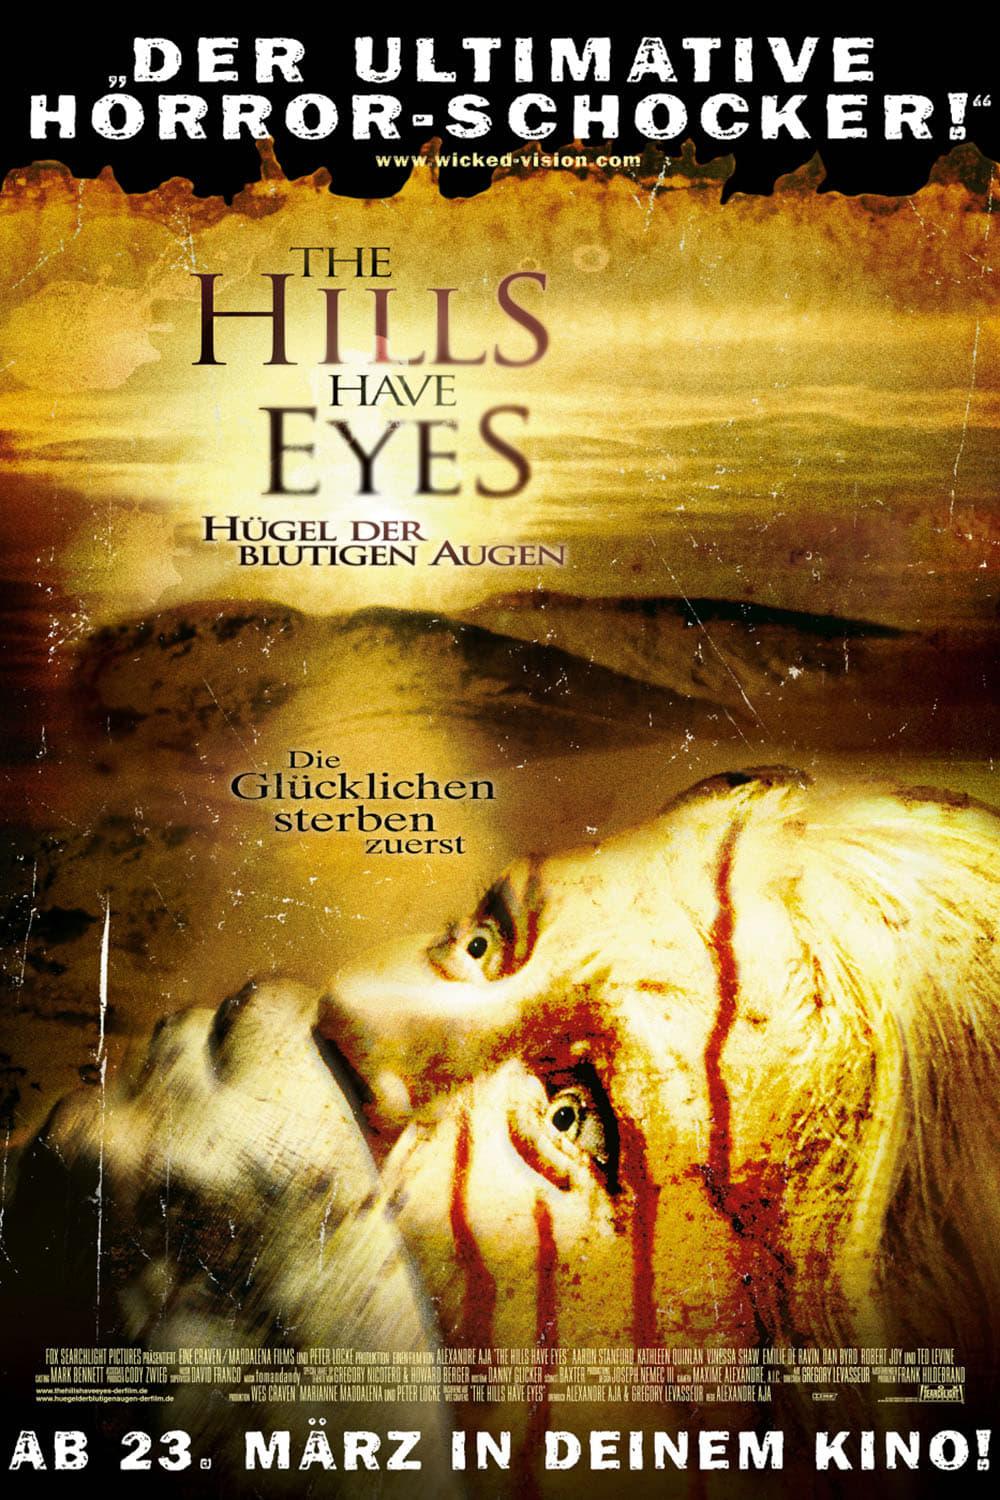 The Hills Have Eyes - Hügel der blutigen Augen poster